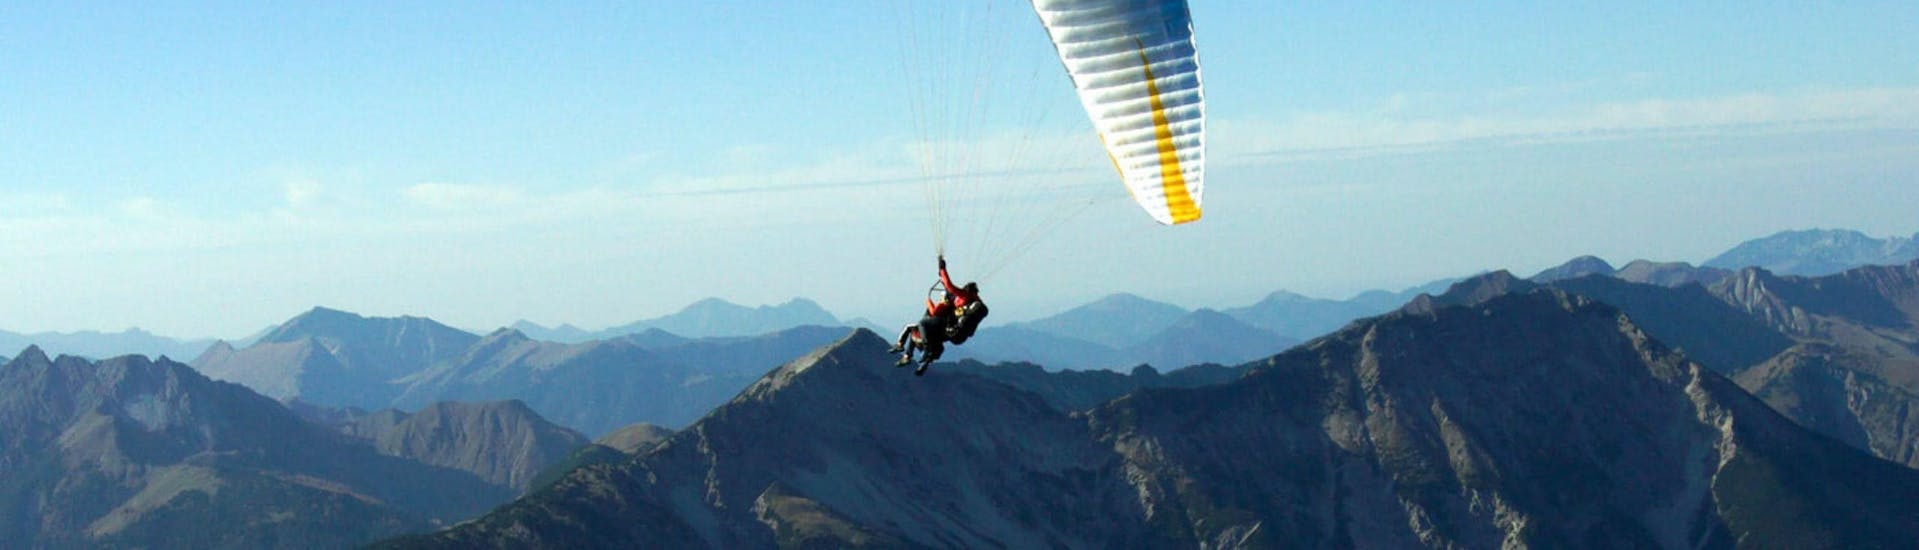 tandem-paragliding-easy-tandem-achensee-hero1